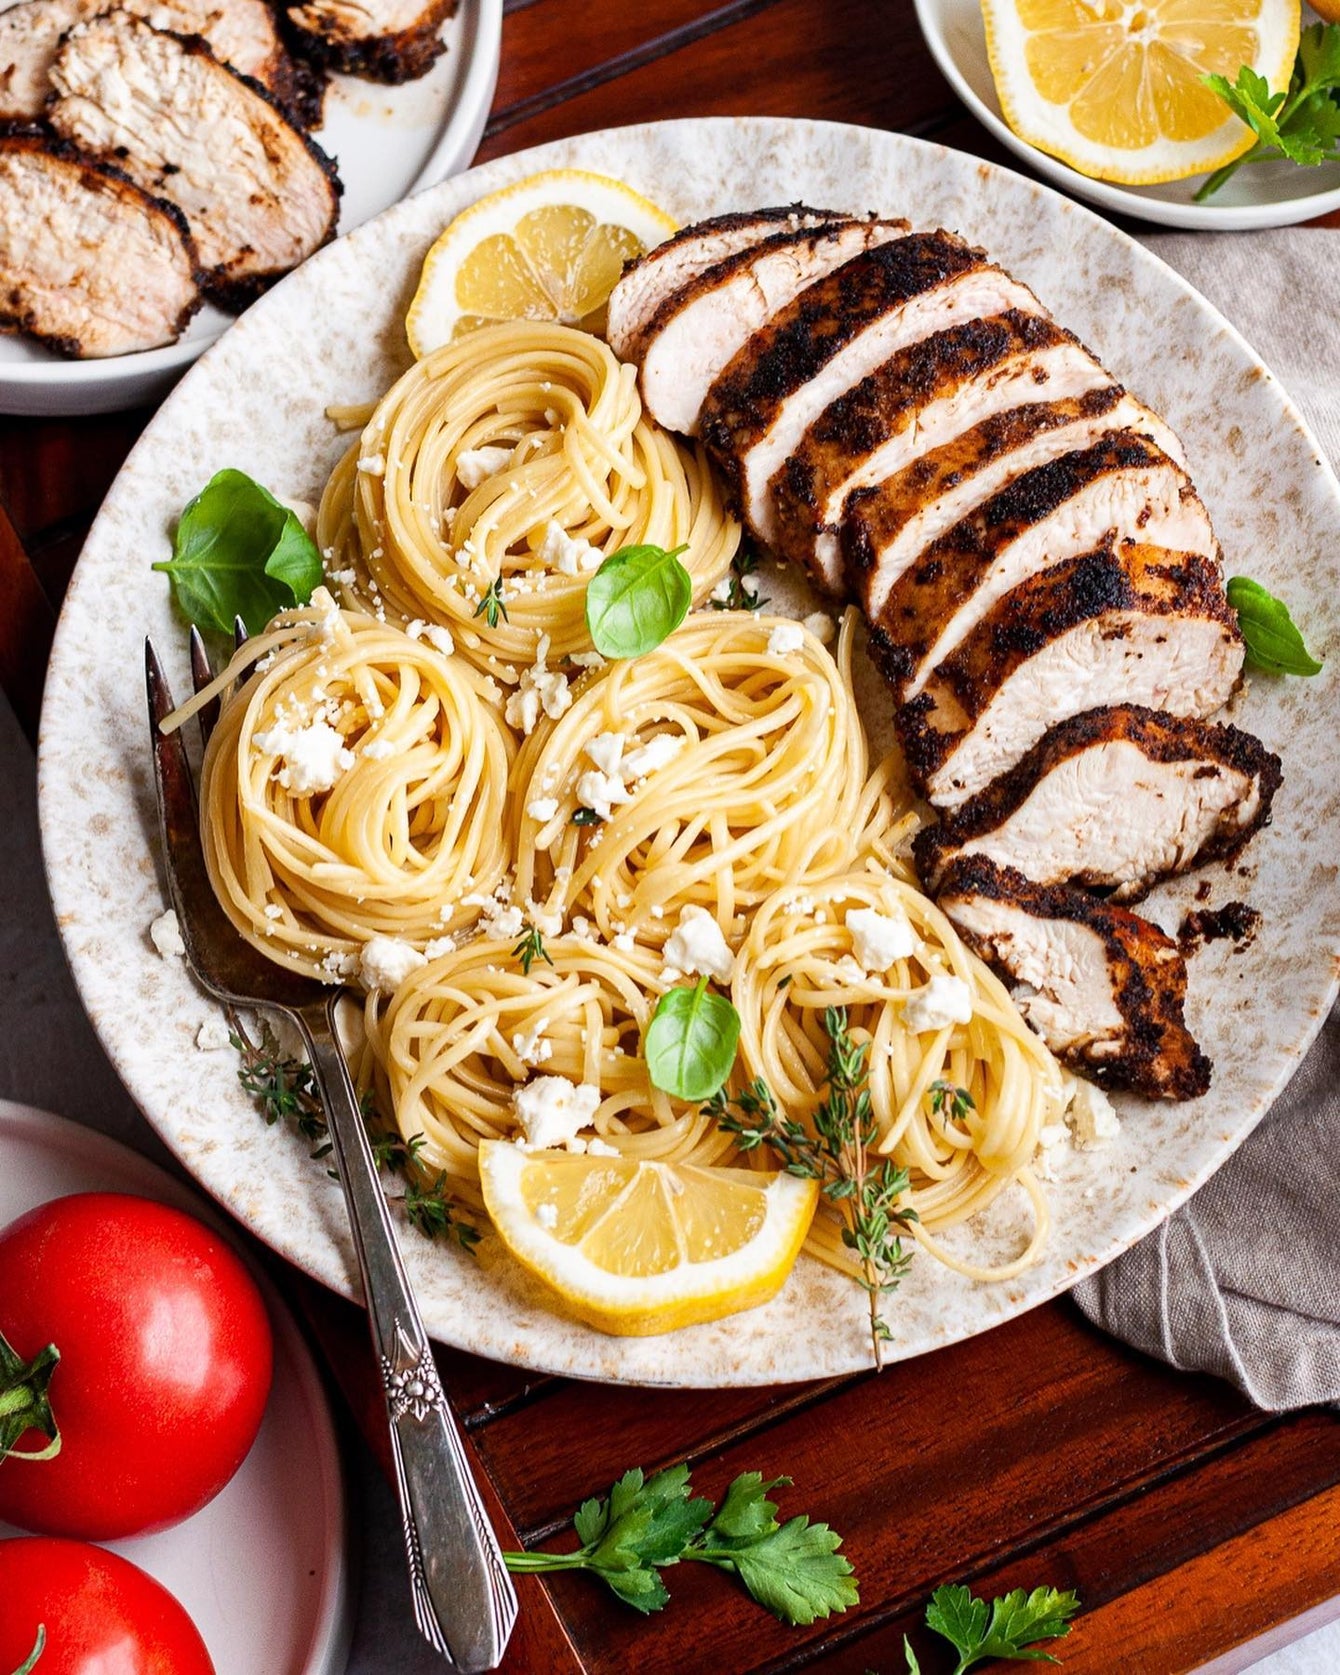 Char Crust dry-rub seasonings on chicken breast with pasta. Perfect for Italian menus.